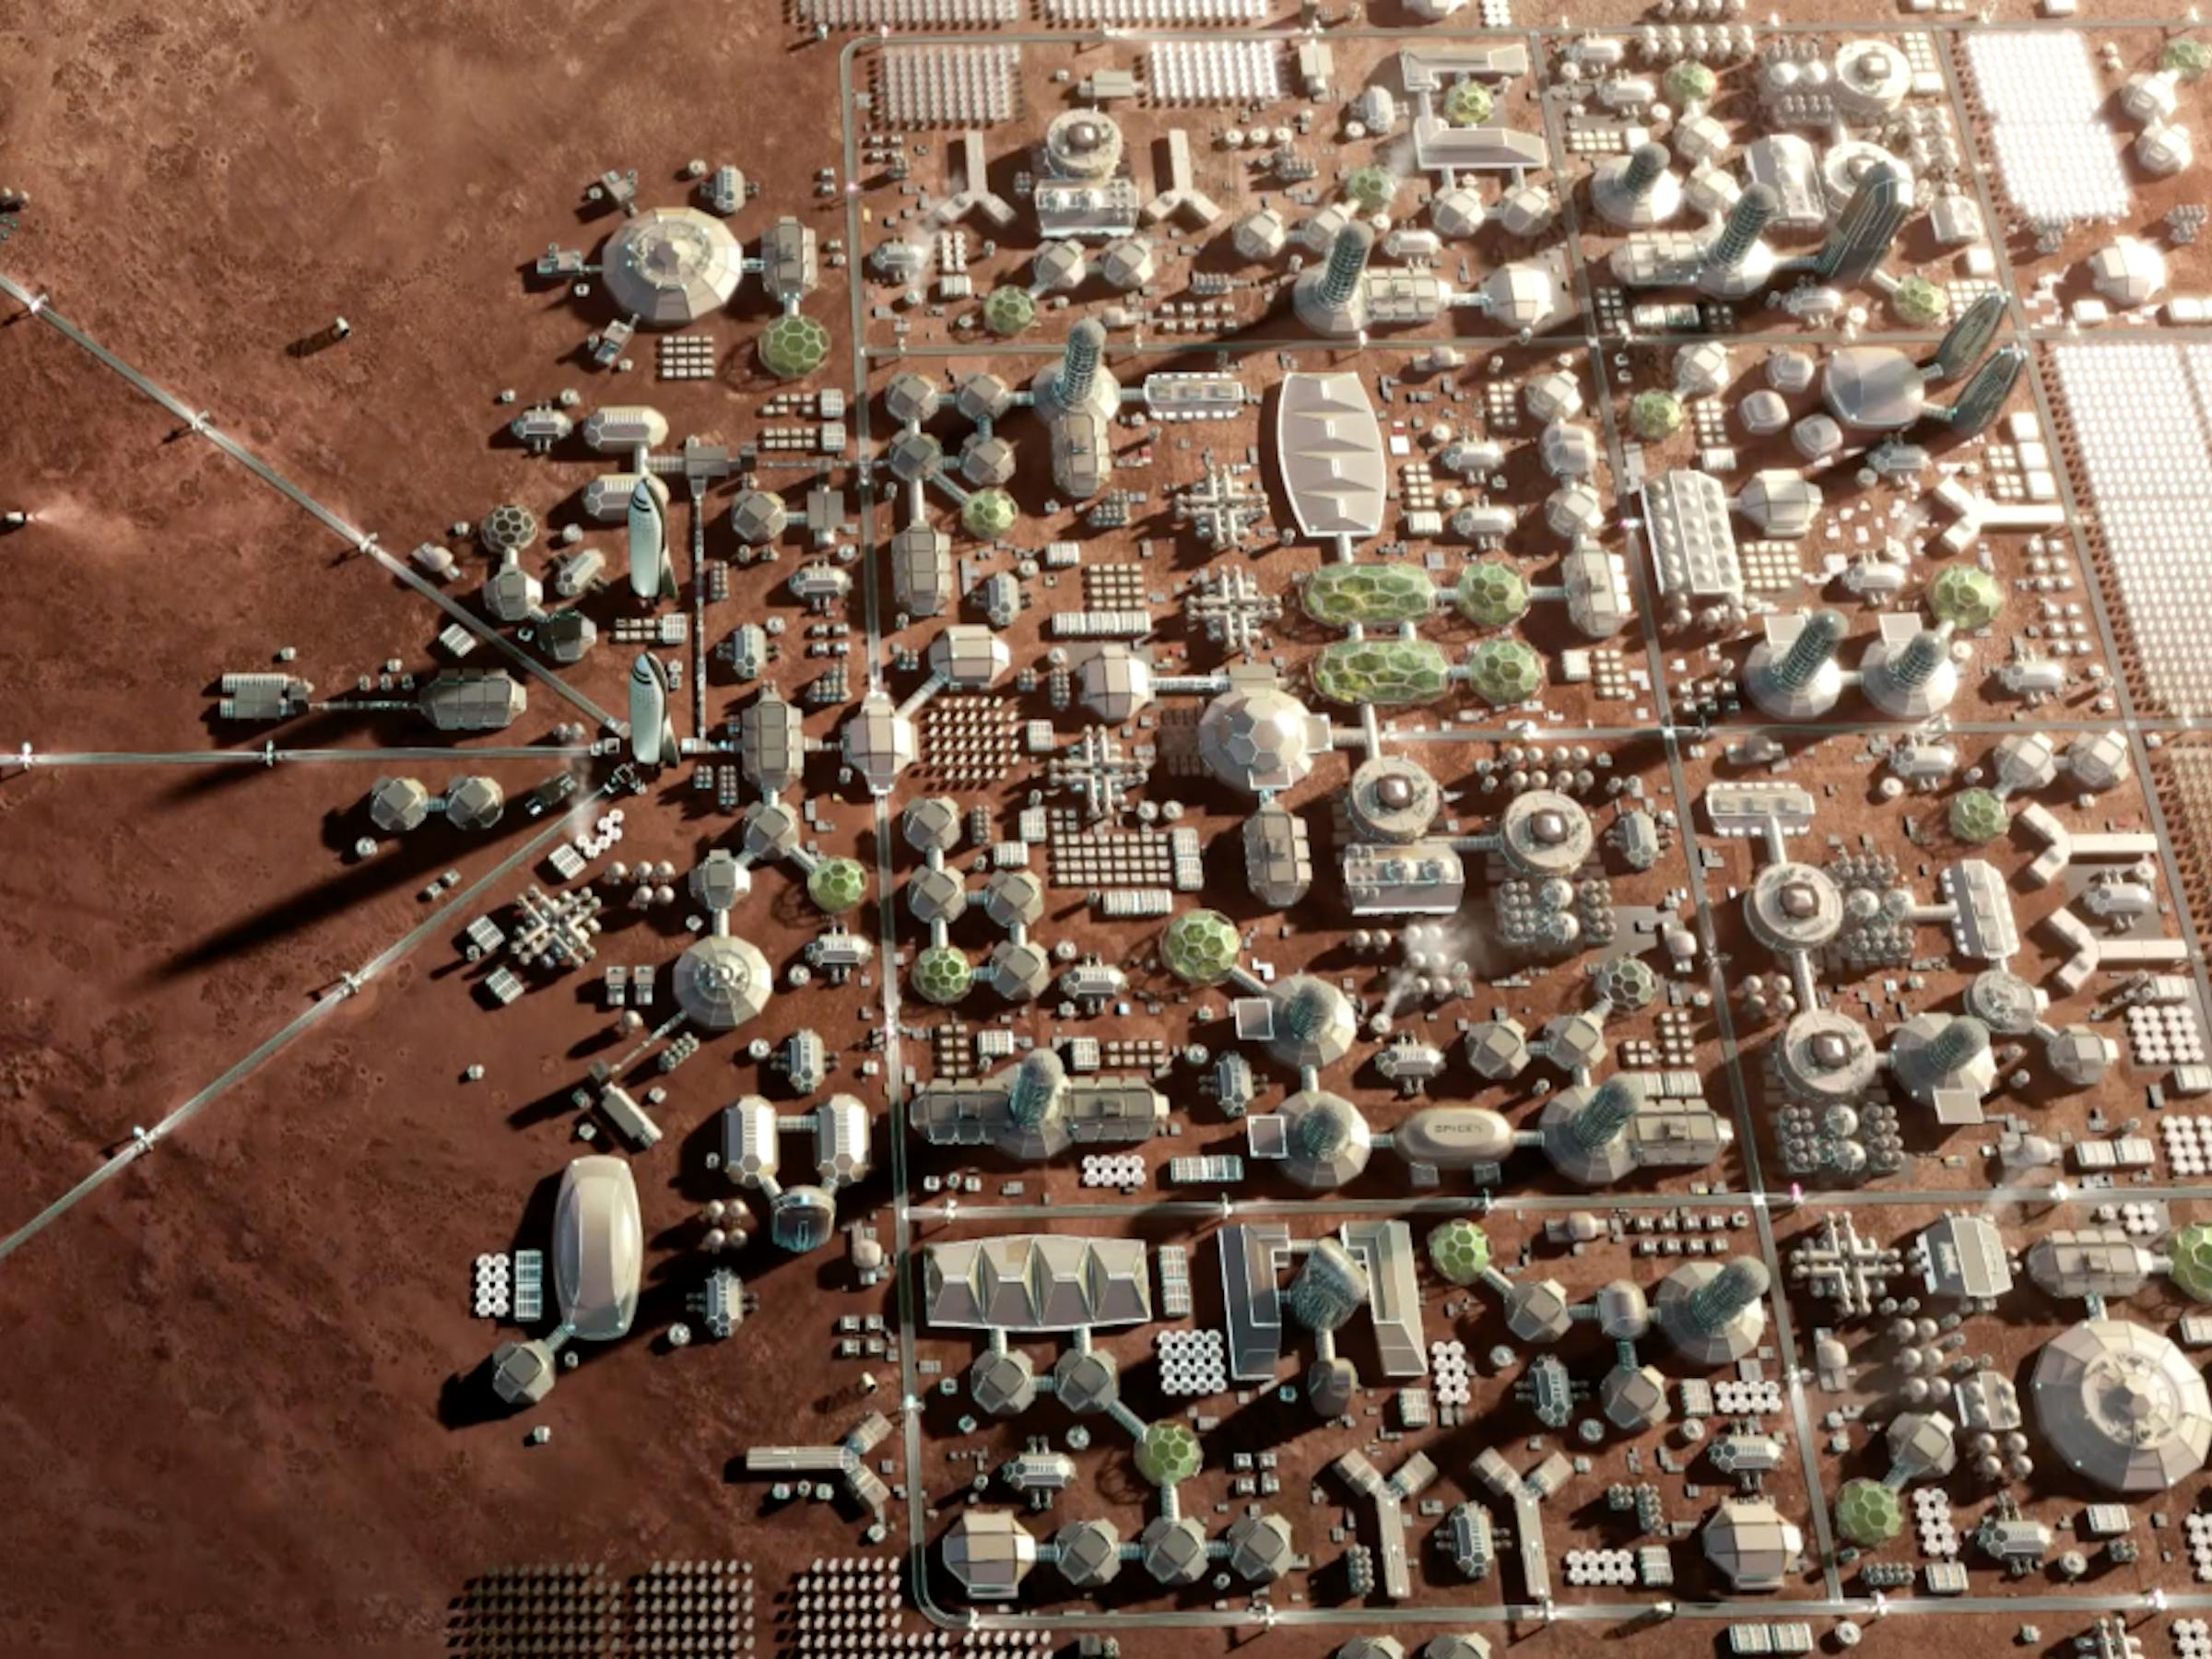 A Mars city.